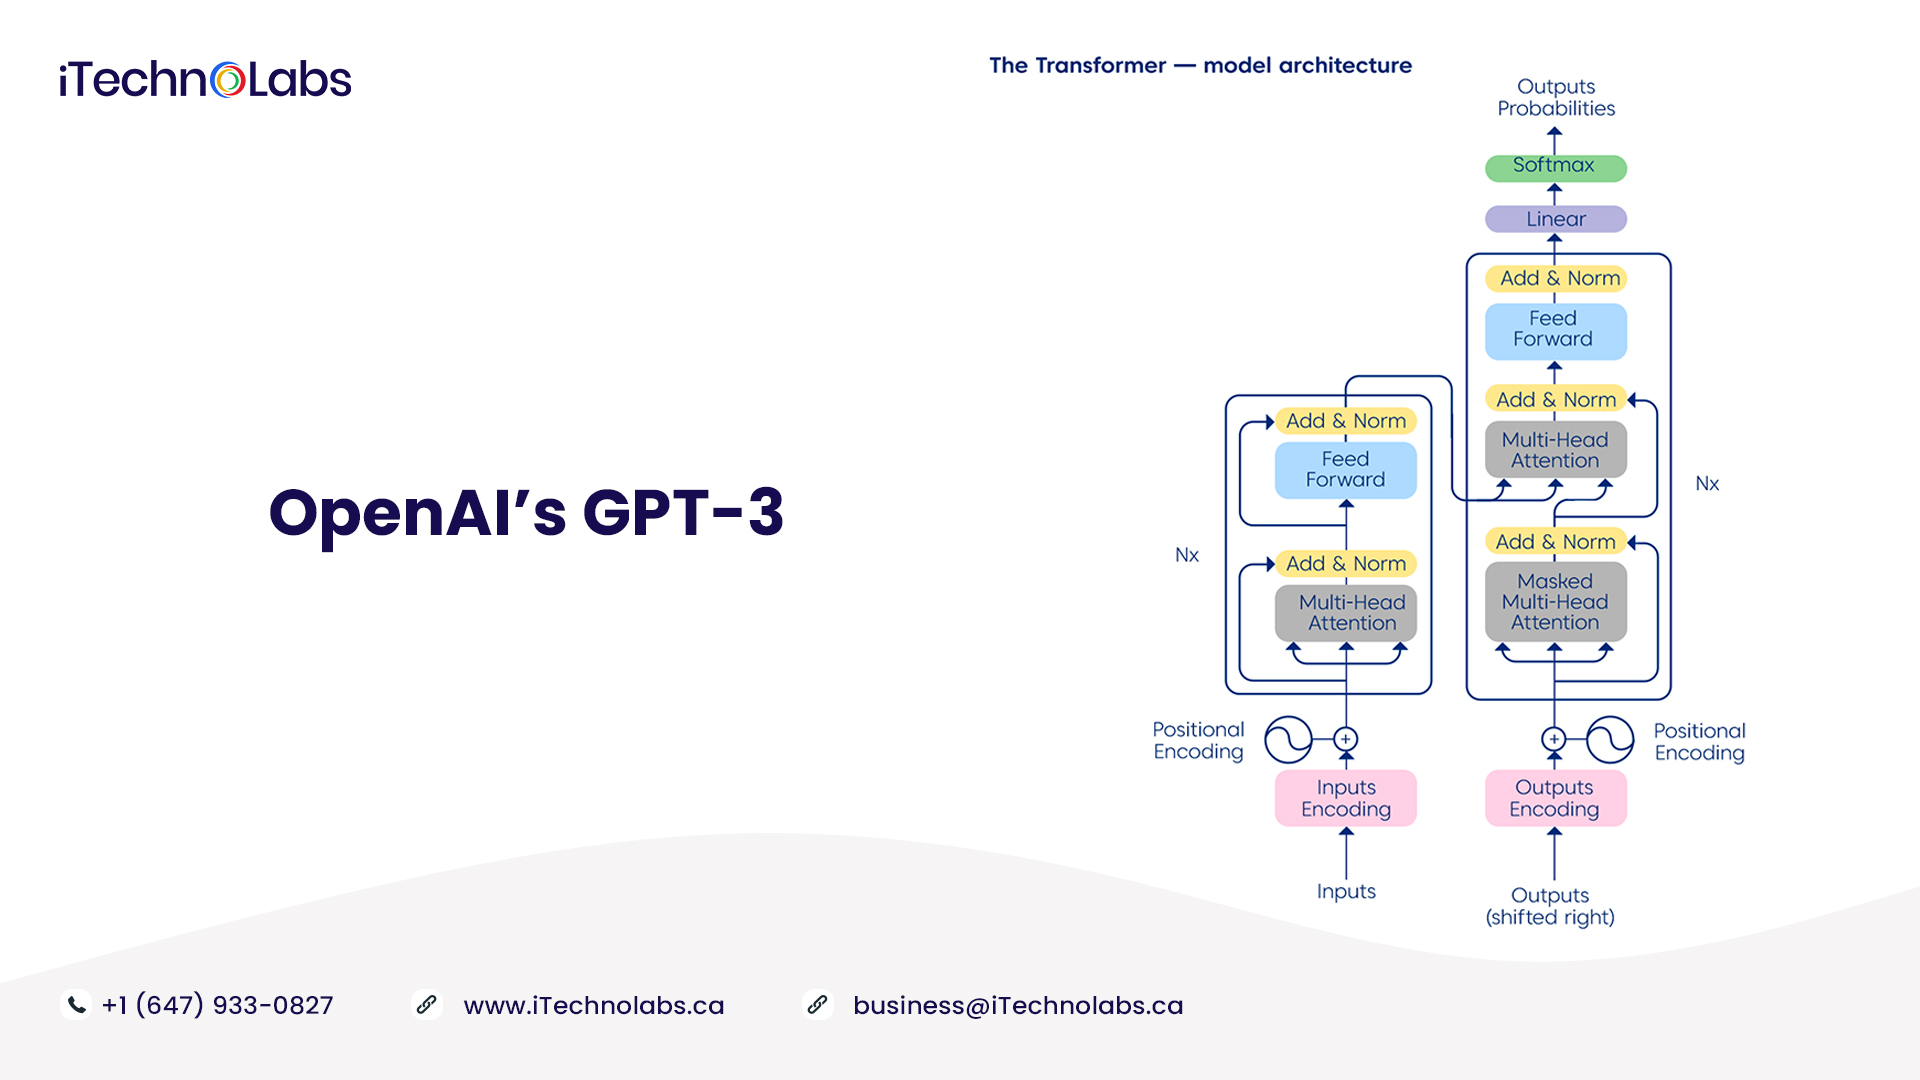 openai’s gpt-3 nlp model itechnolabs